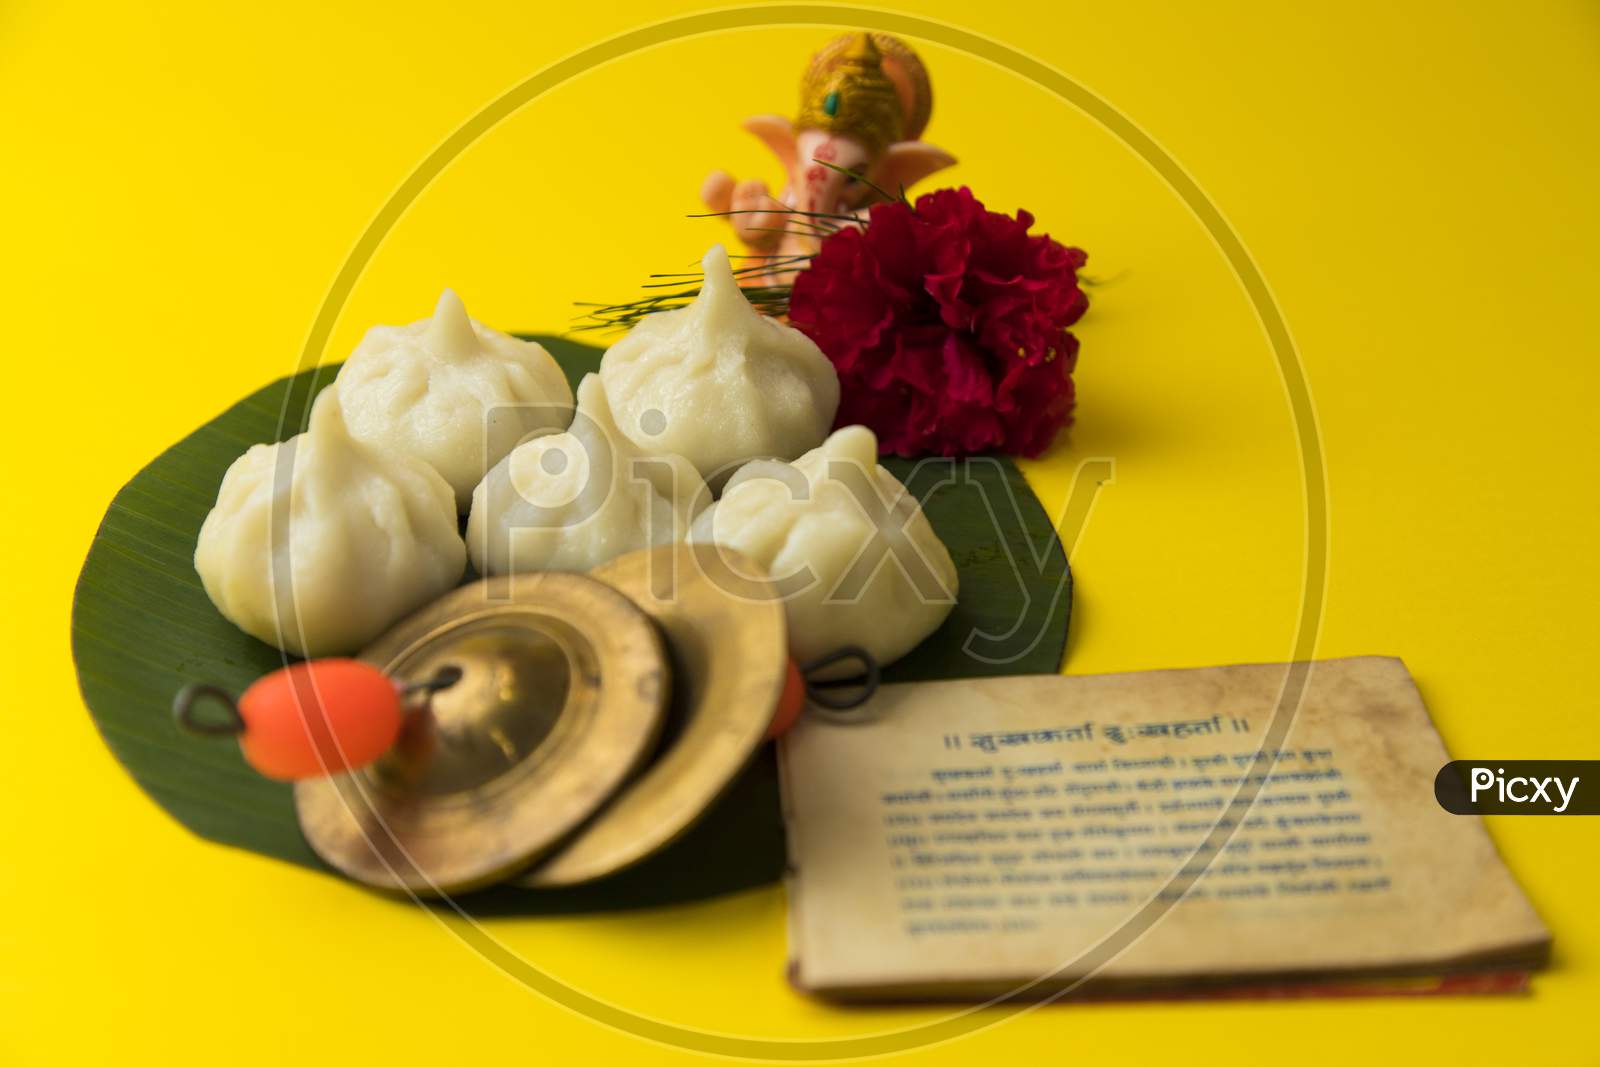 Modak, an Indian sweet made during Ganeshotsav for lord Ganesha